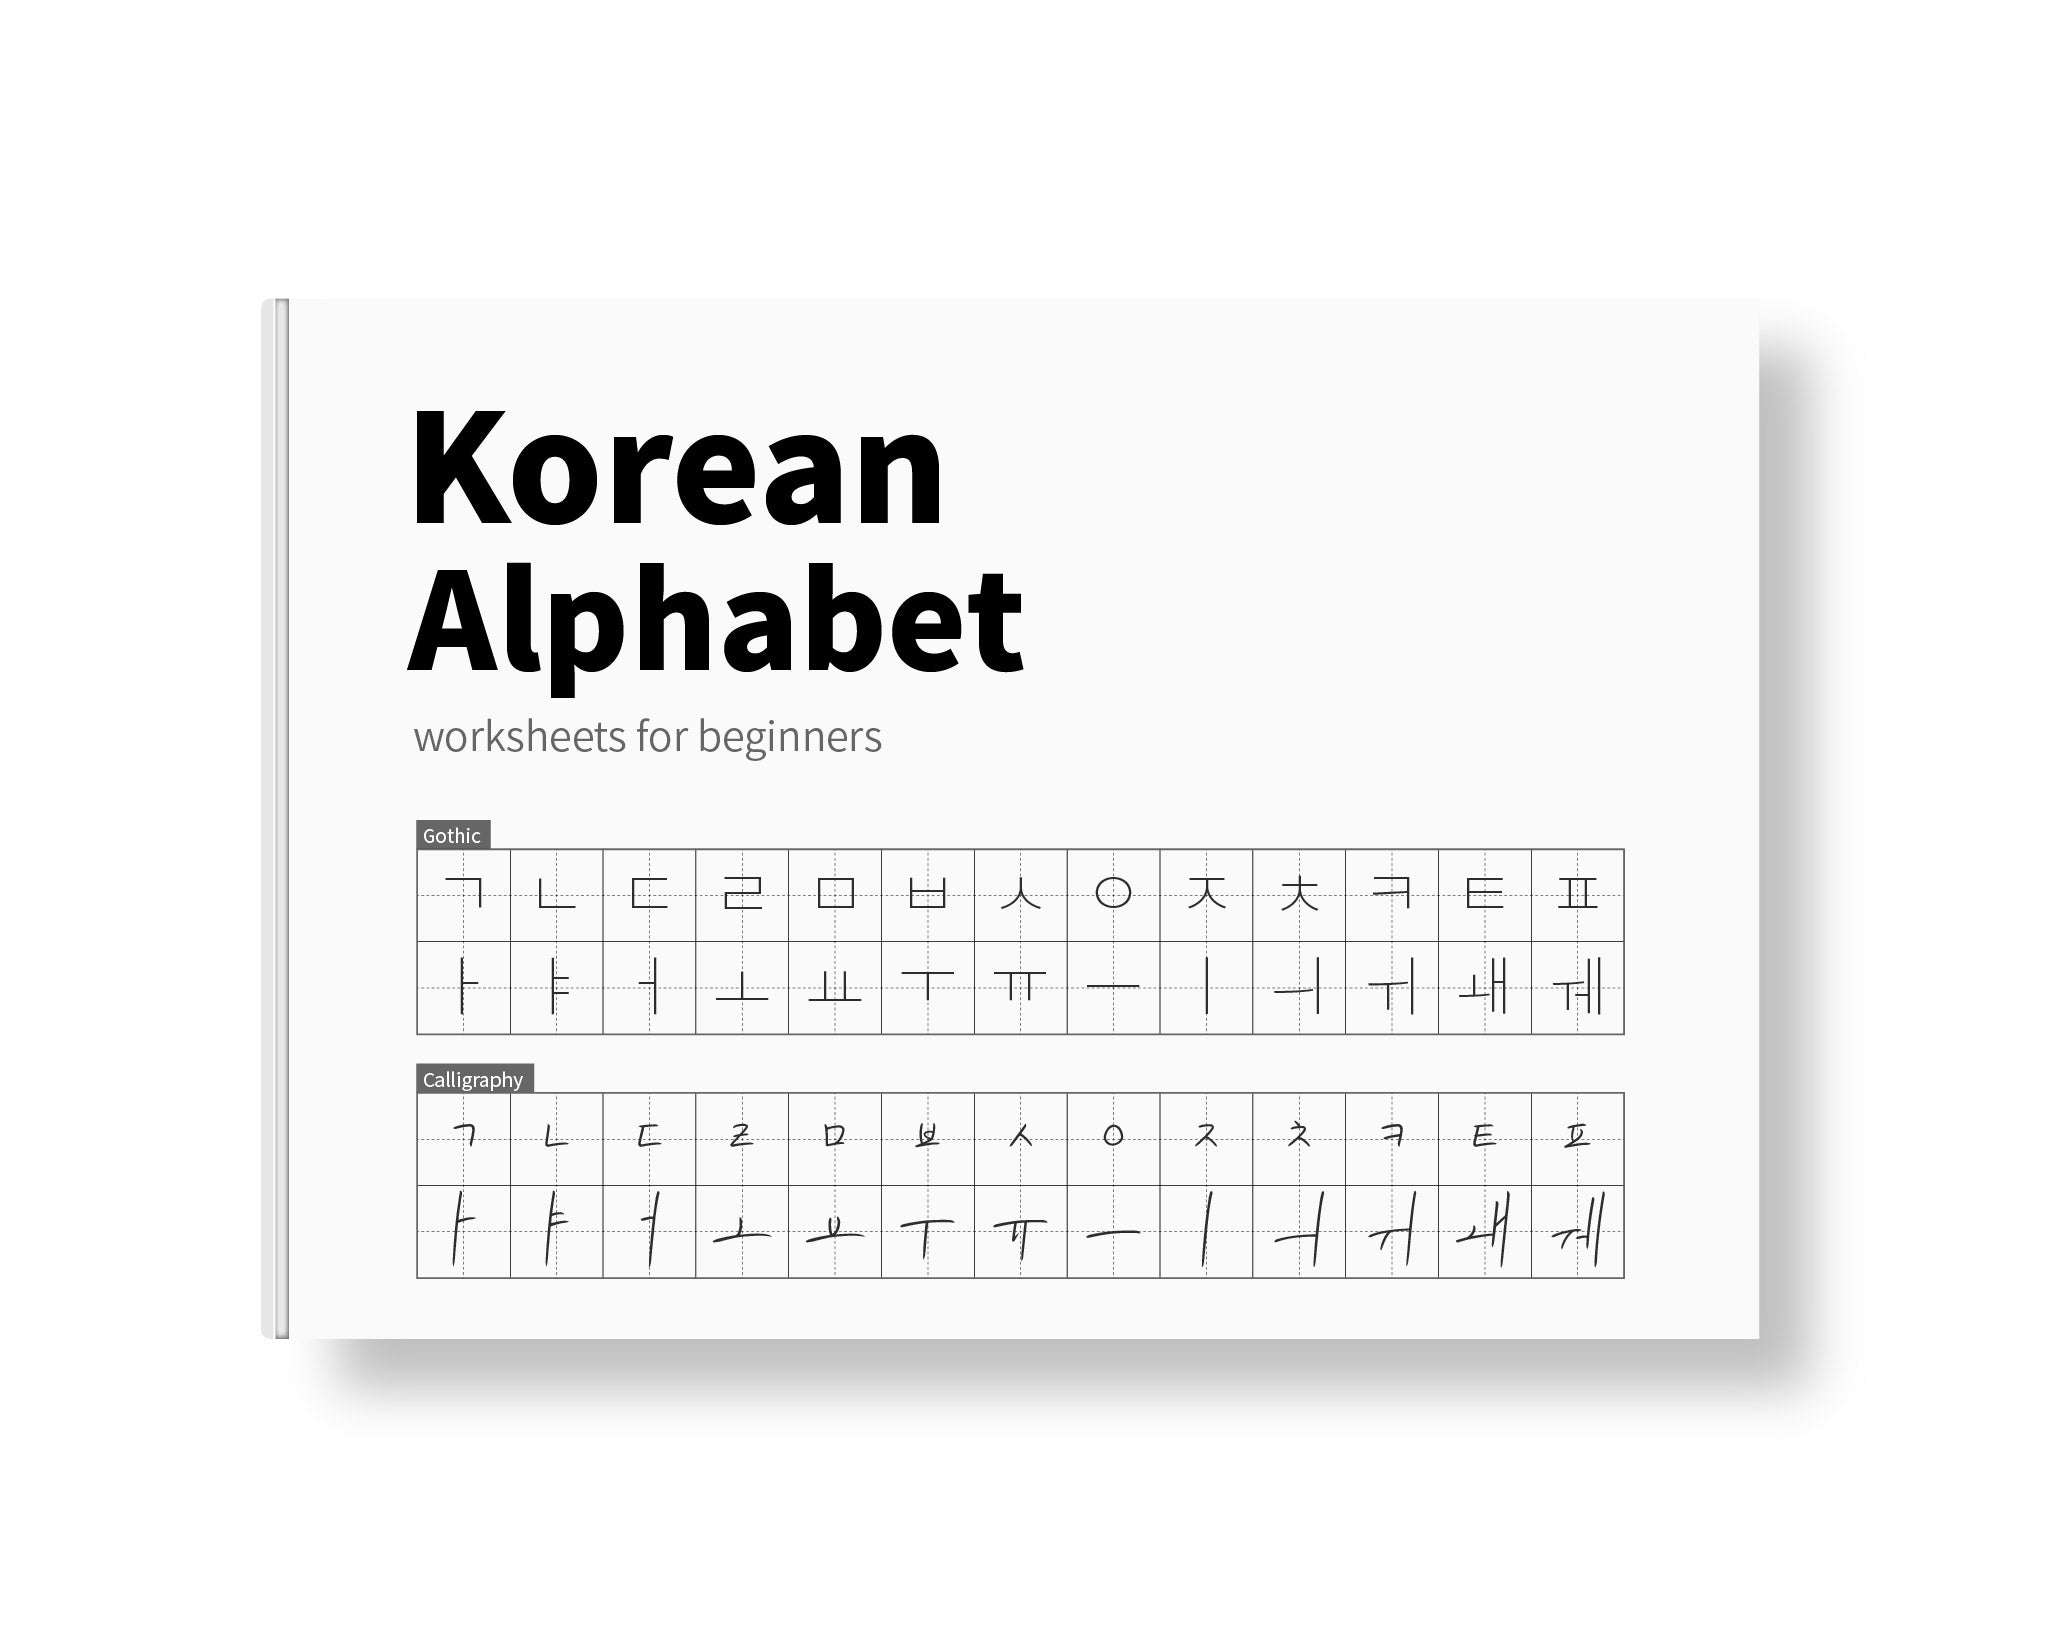 Hangul alphabet